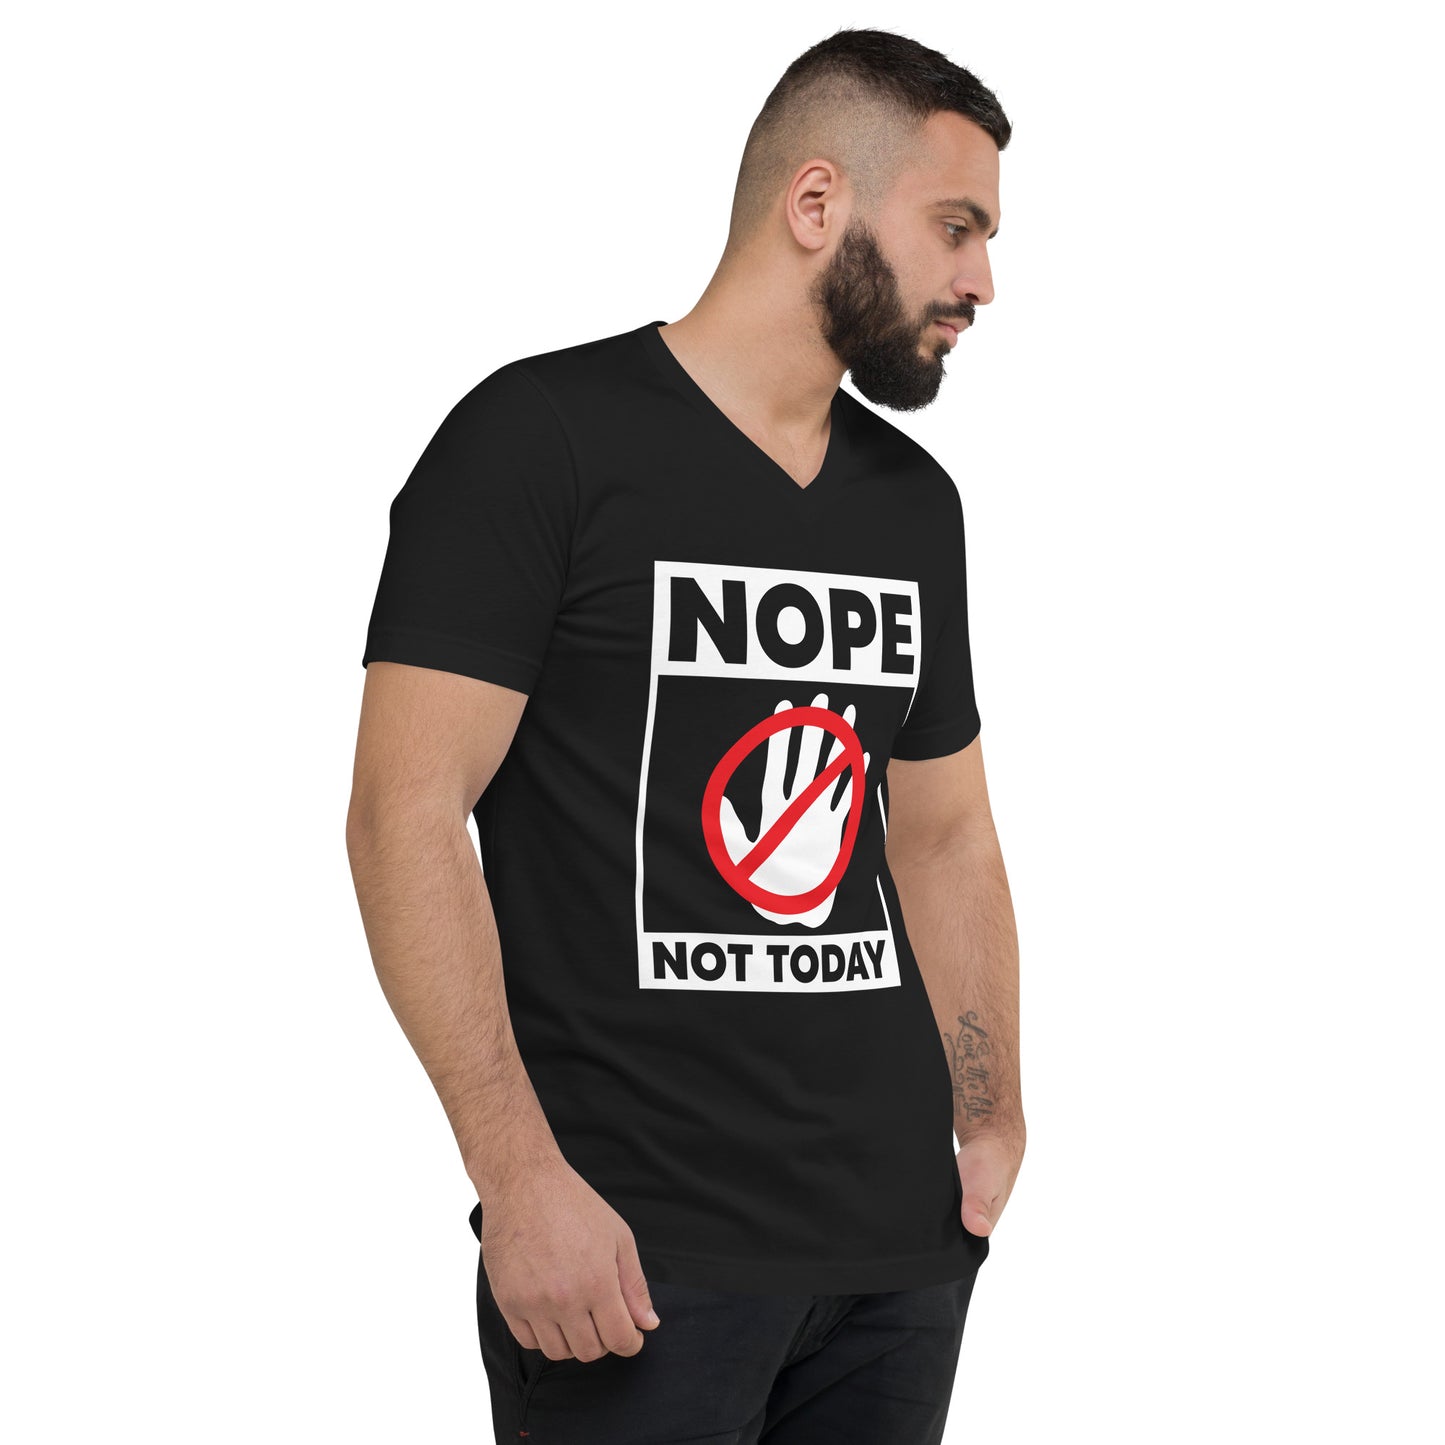 Nope Not Today Unisex Short Sleeve V-Neck T-Shirt